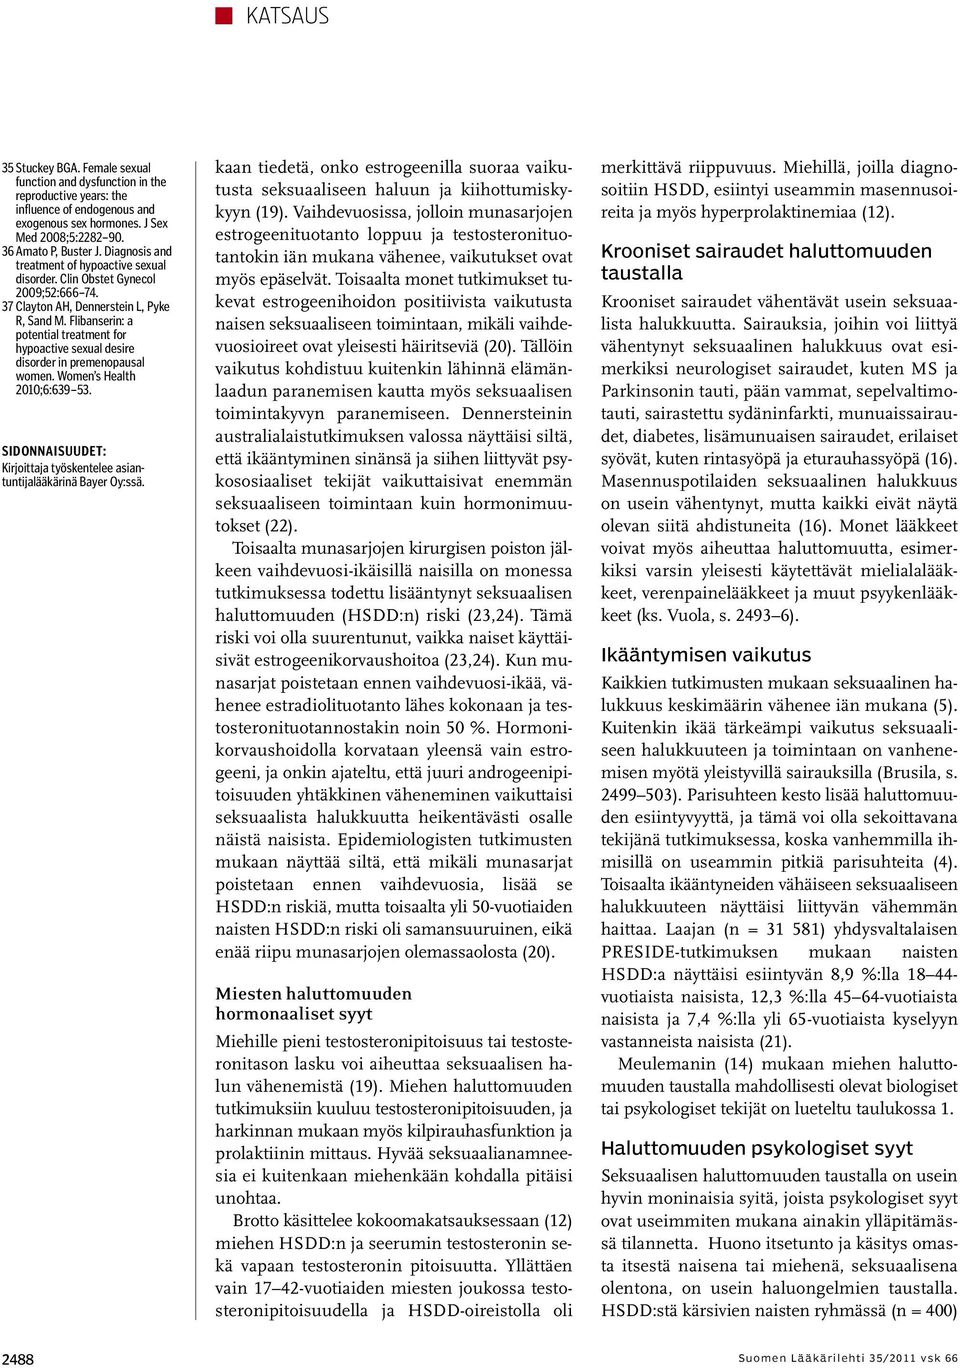 Flibanserin: a potential treatment for hypoactive sexual desire disorder in premenopausal women. Women s Health 2010;6:639 53.